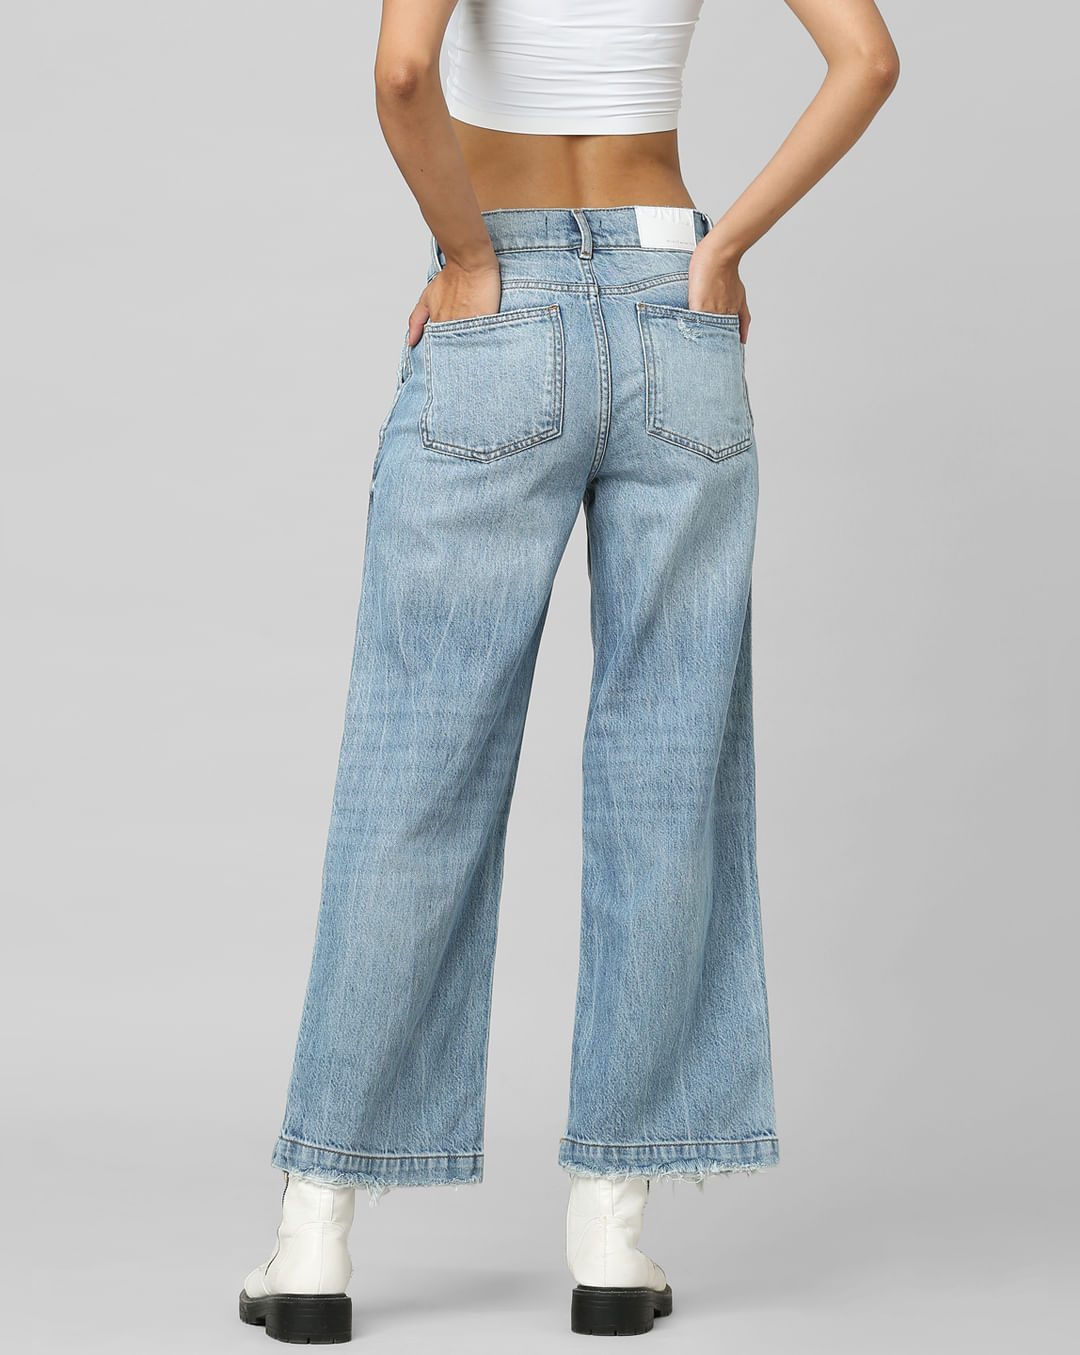 GENERIC Trousers Women Retro Small Waist Light Blue Jeans Tie High